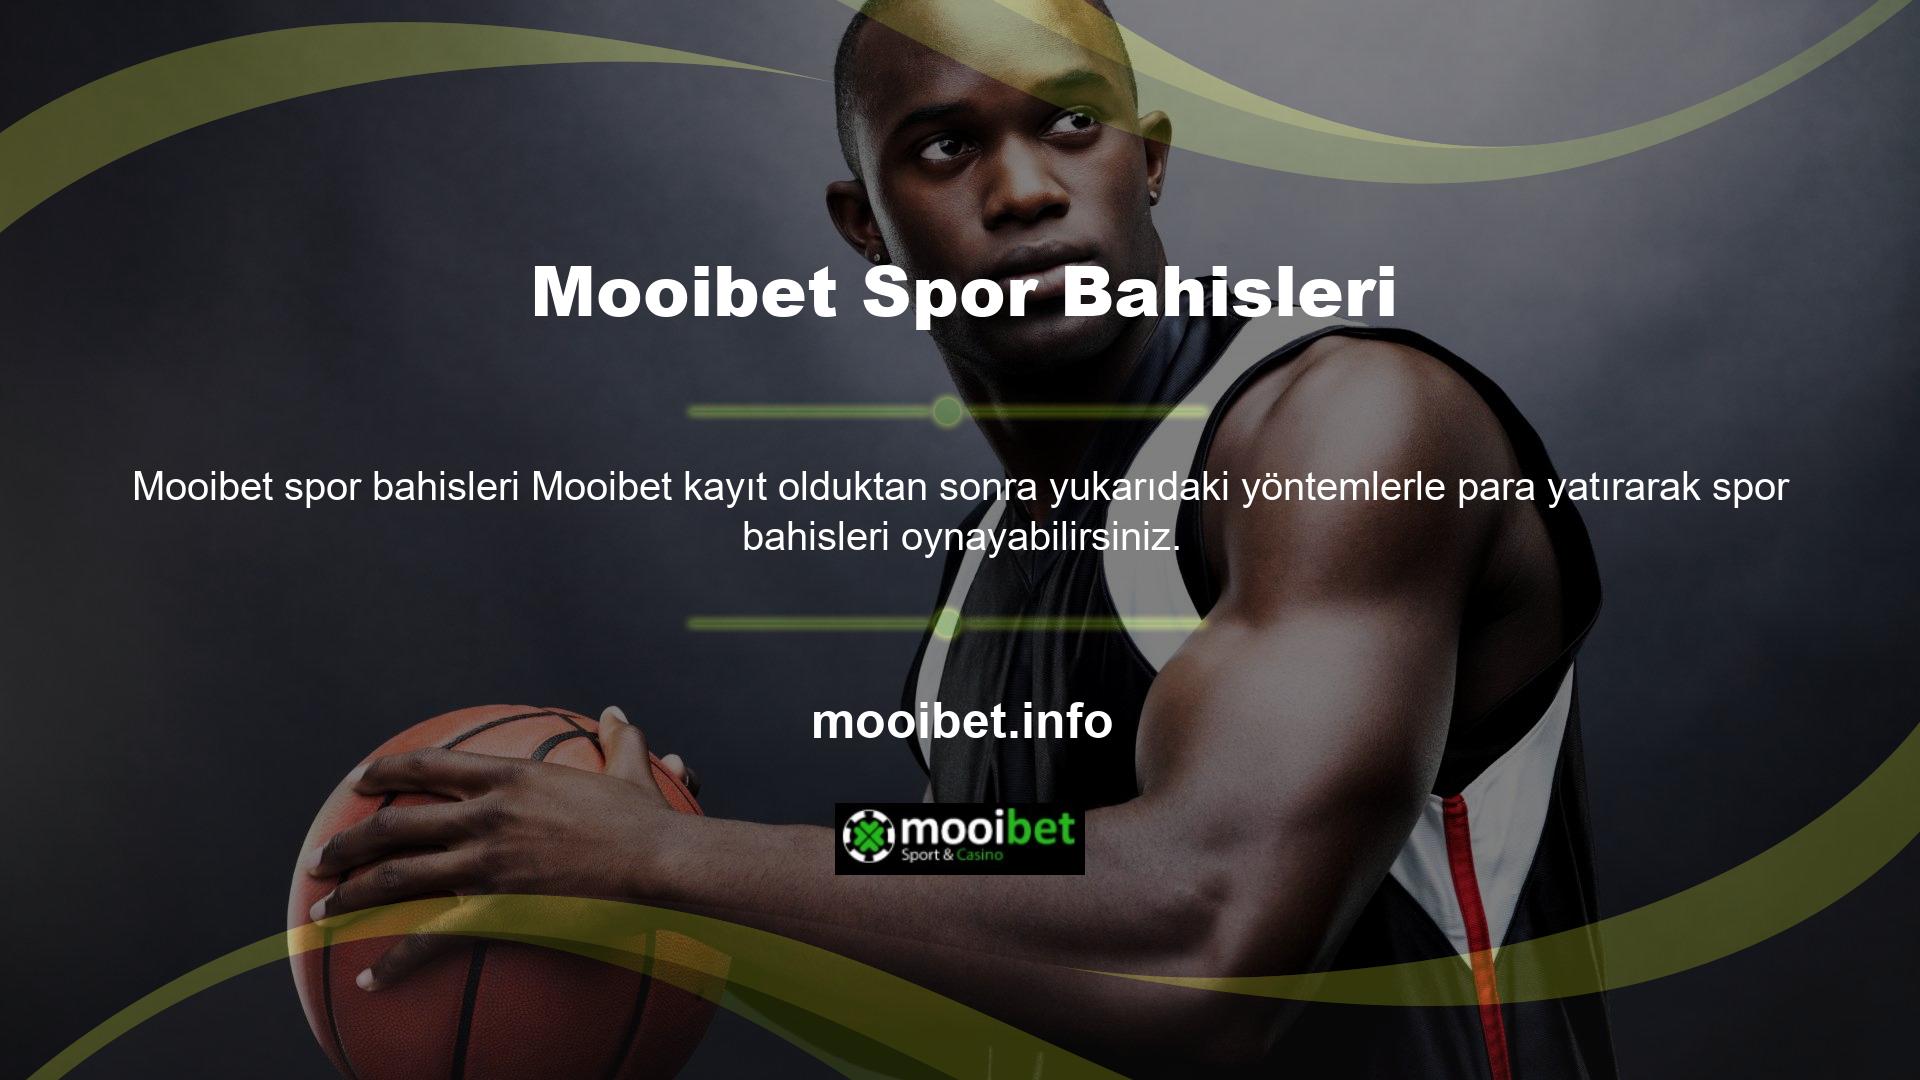 Mooibet spor bahisleri